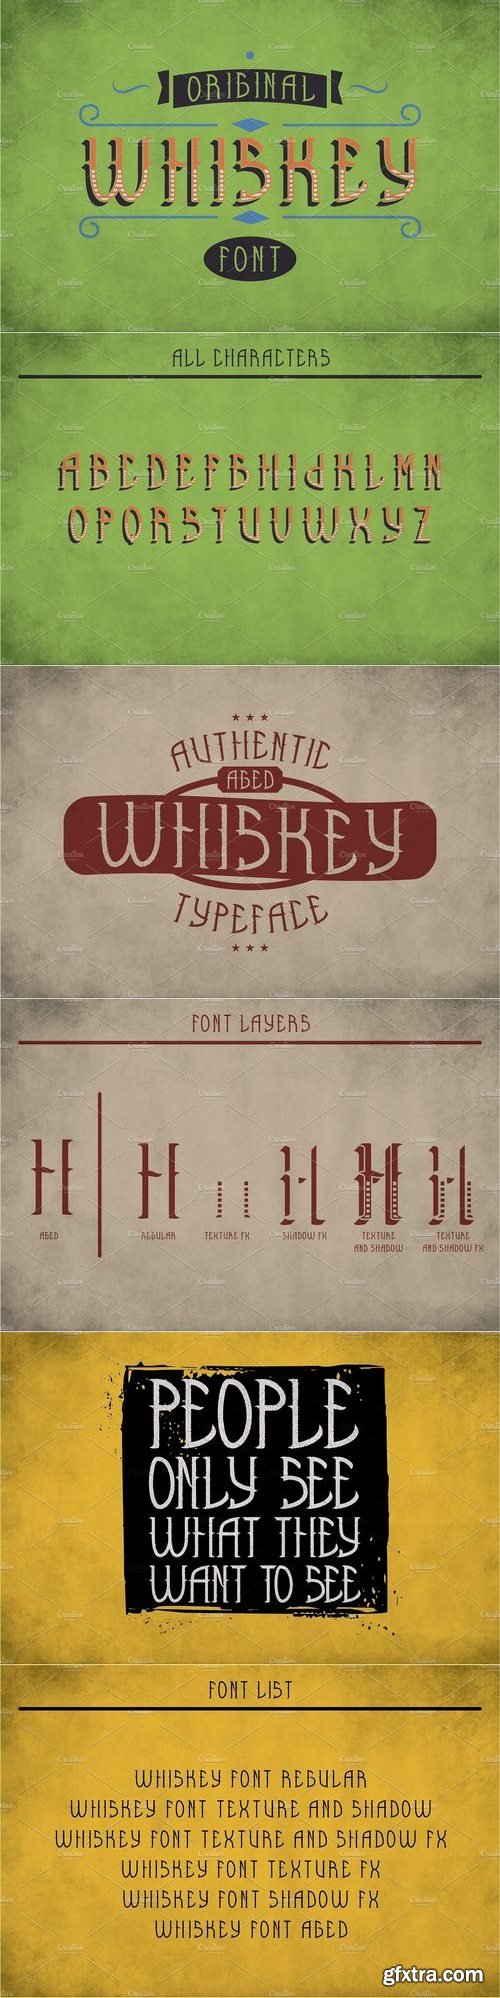 CM - Whiskey Original Label Typeface 1811946